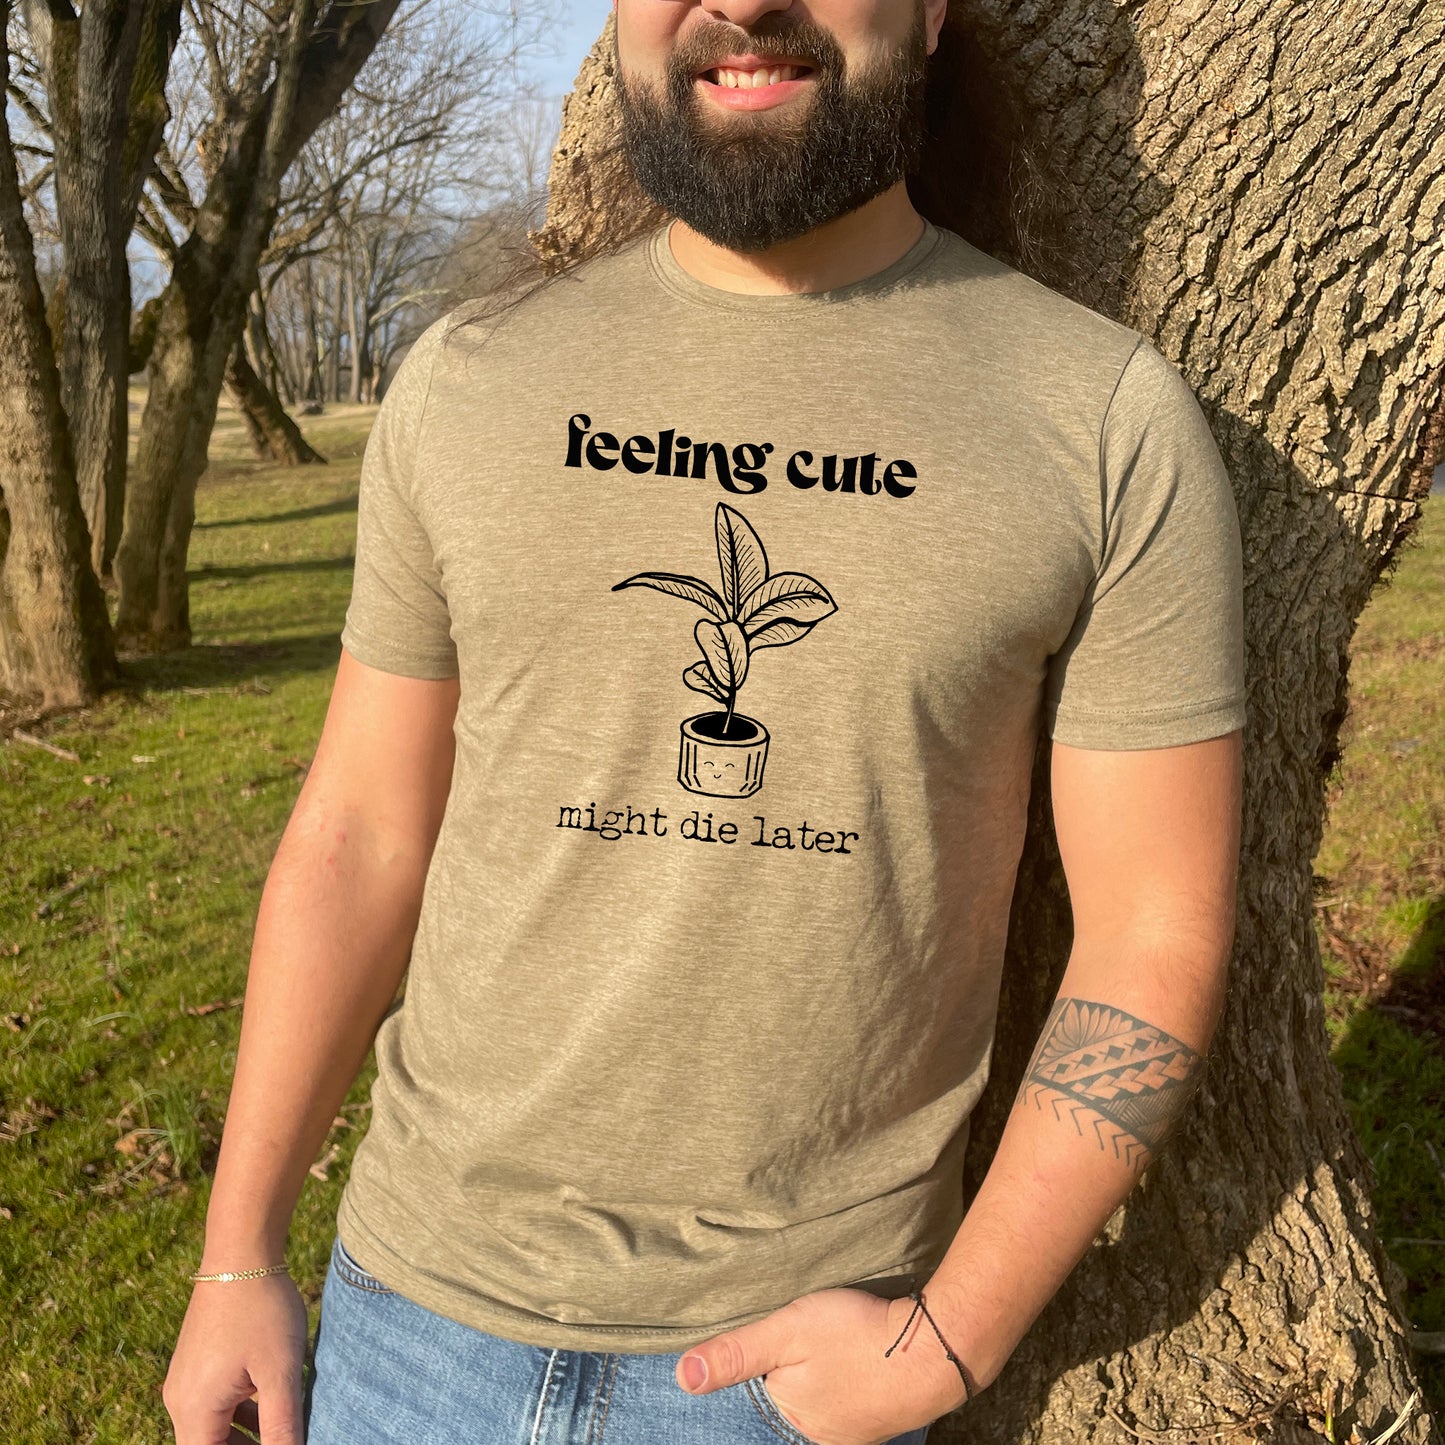 a man standing next to a tree wearing a t - shirt